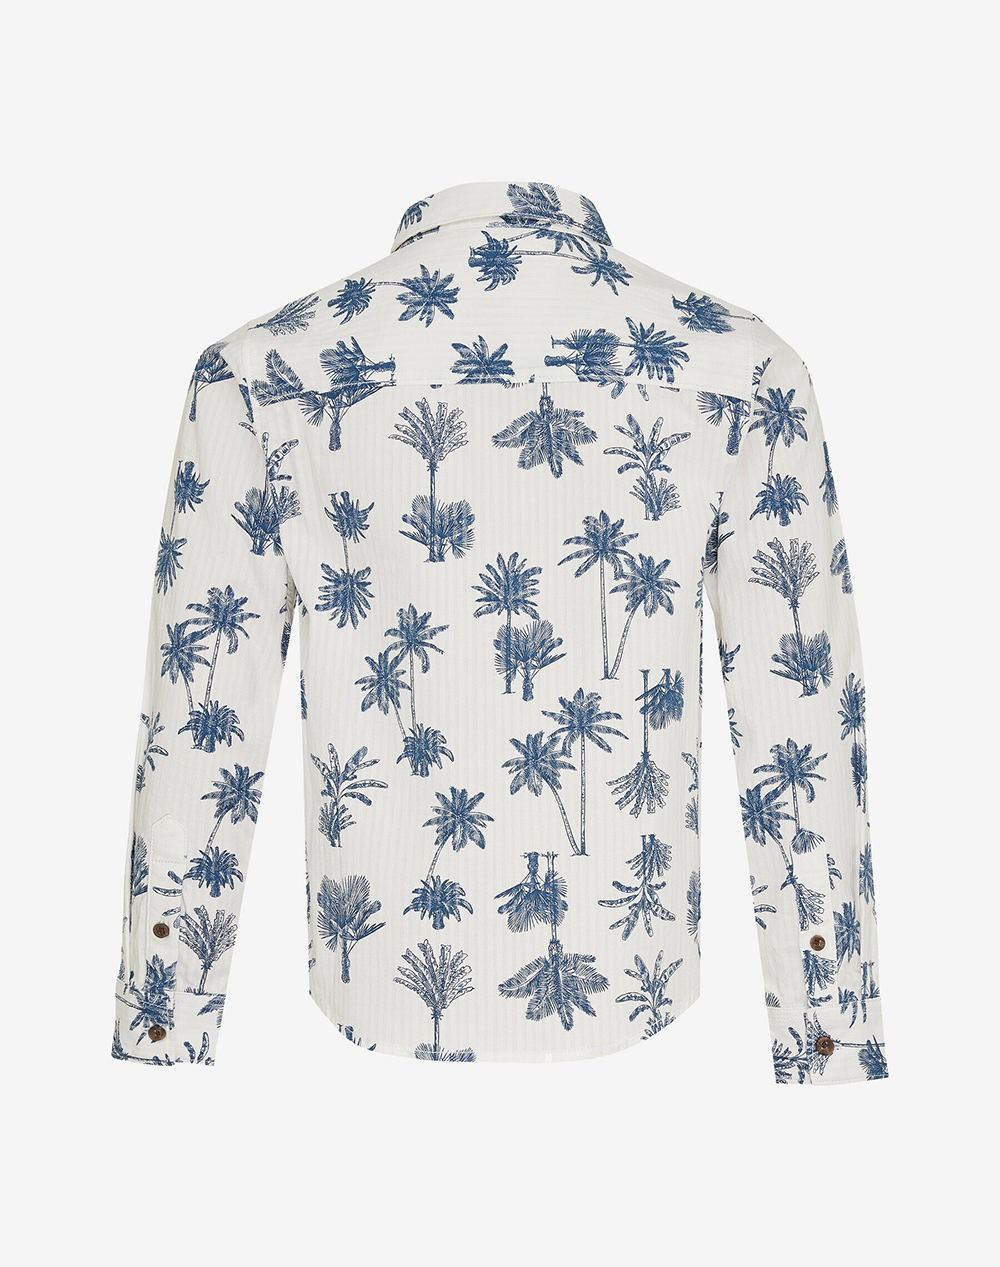 MEXX Seersucker shirt with allover palm print